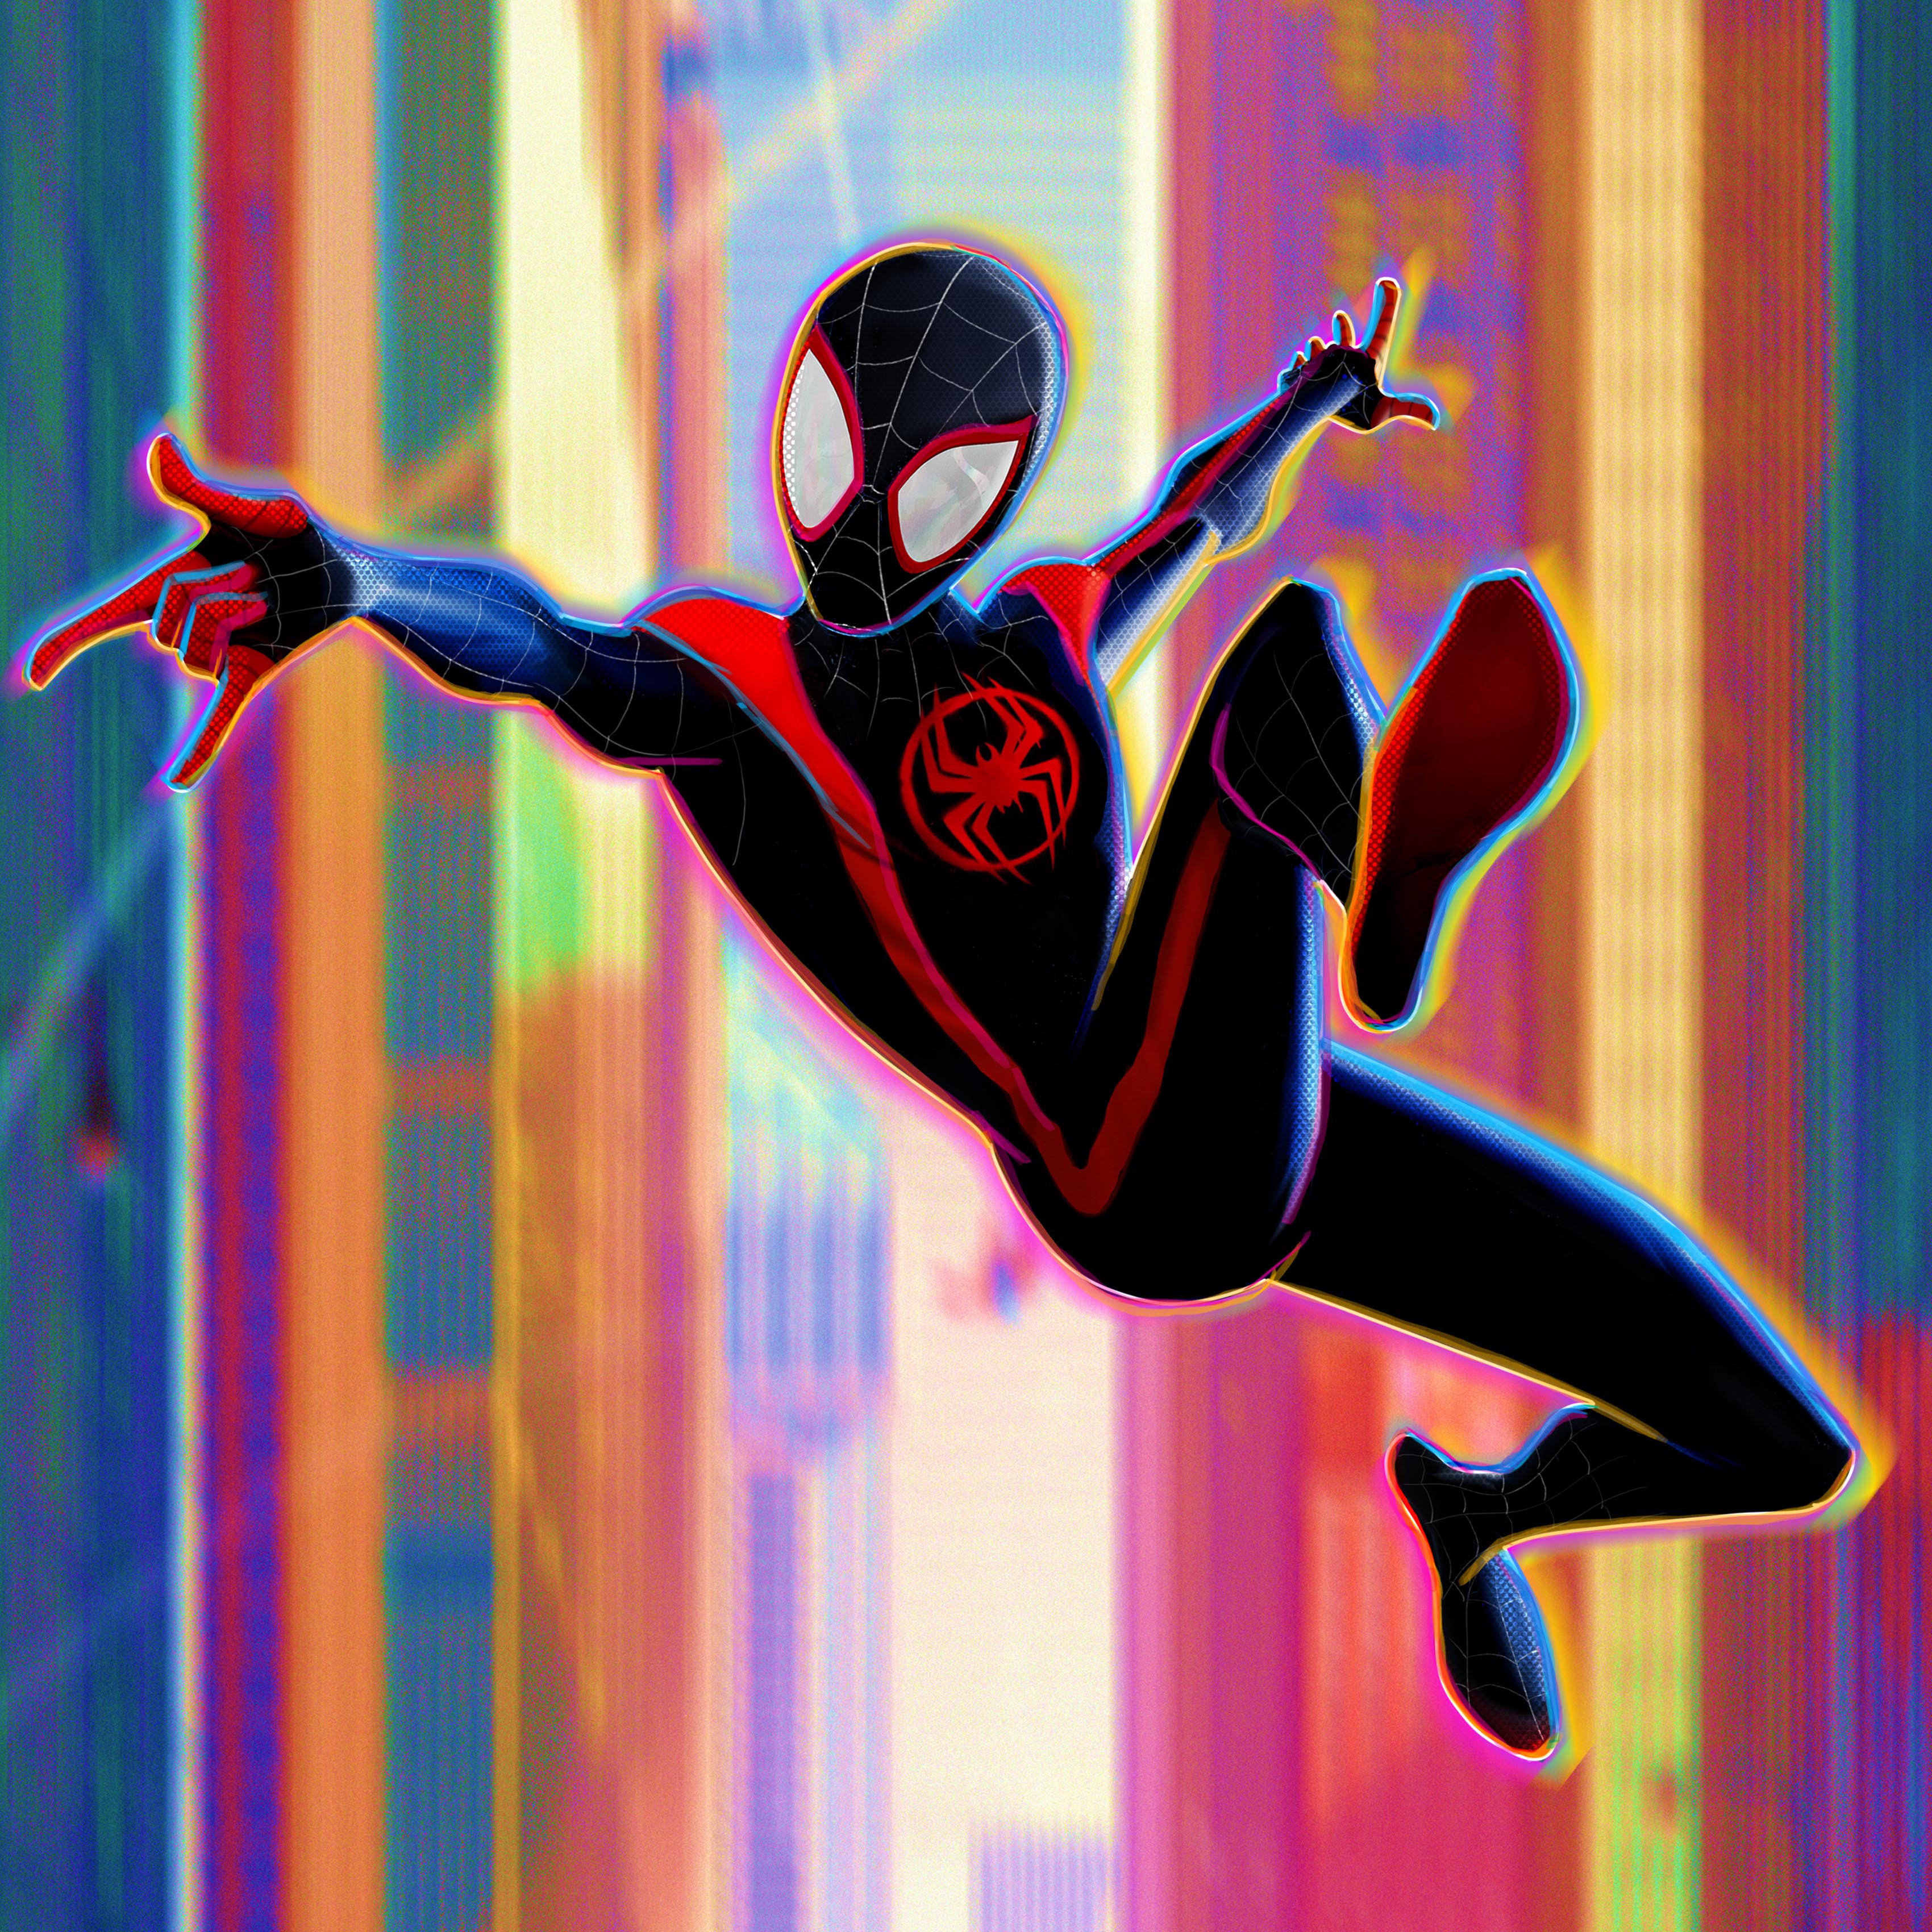 Spiderman Across The Spider Verse Art 3 by MarkDeuce on DeviantArt